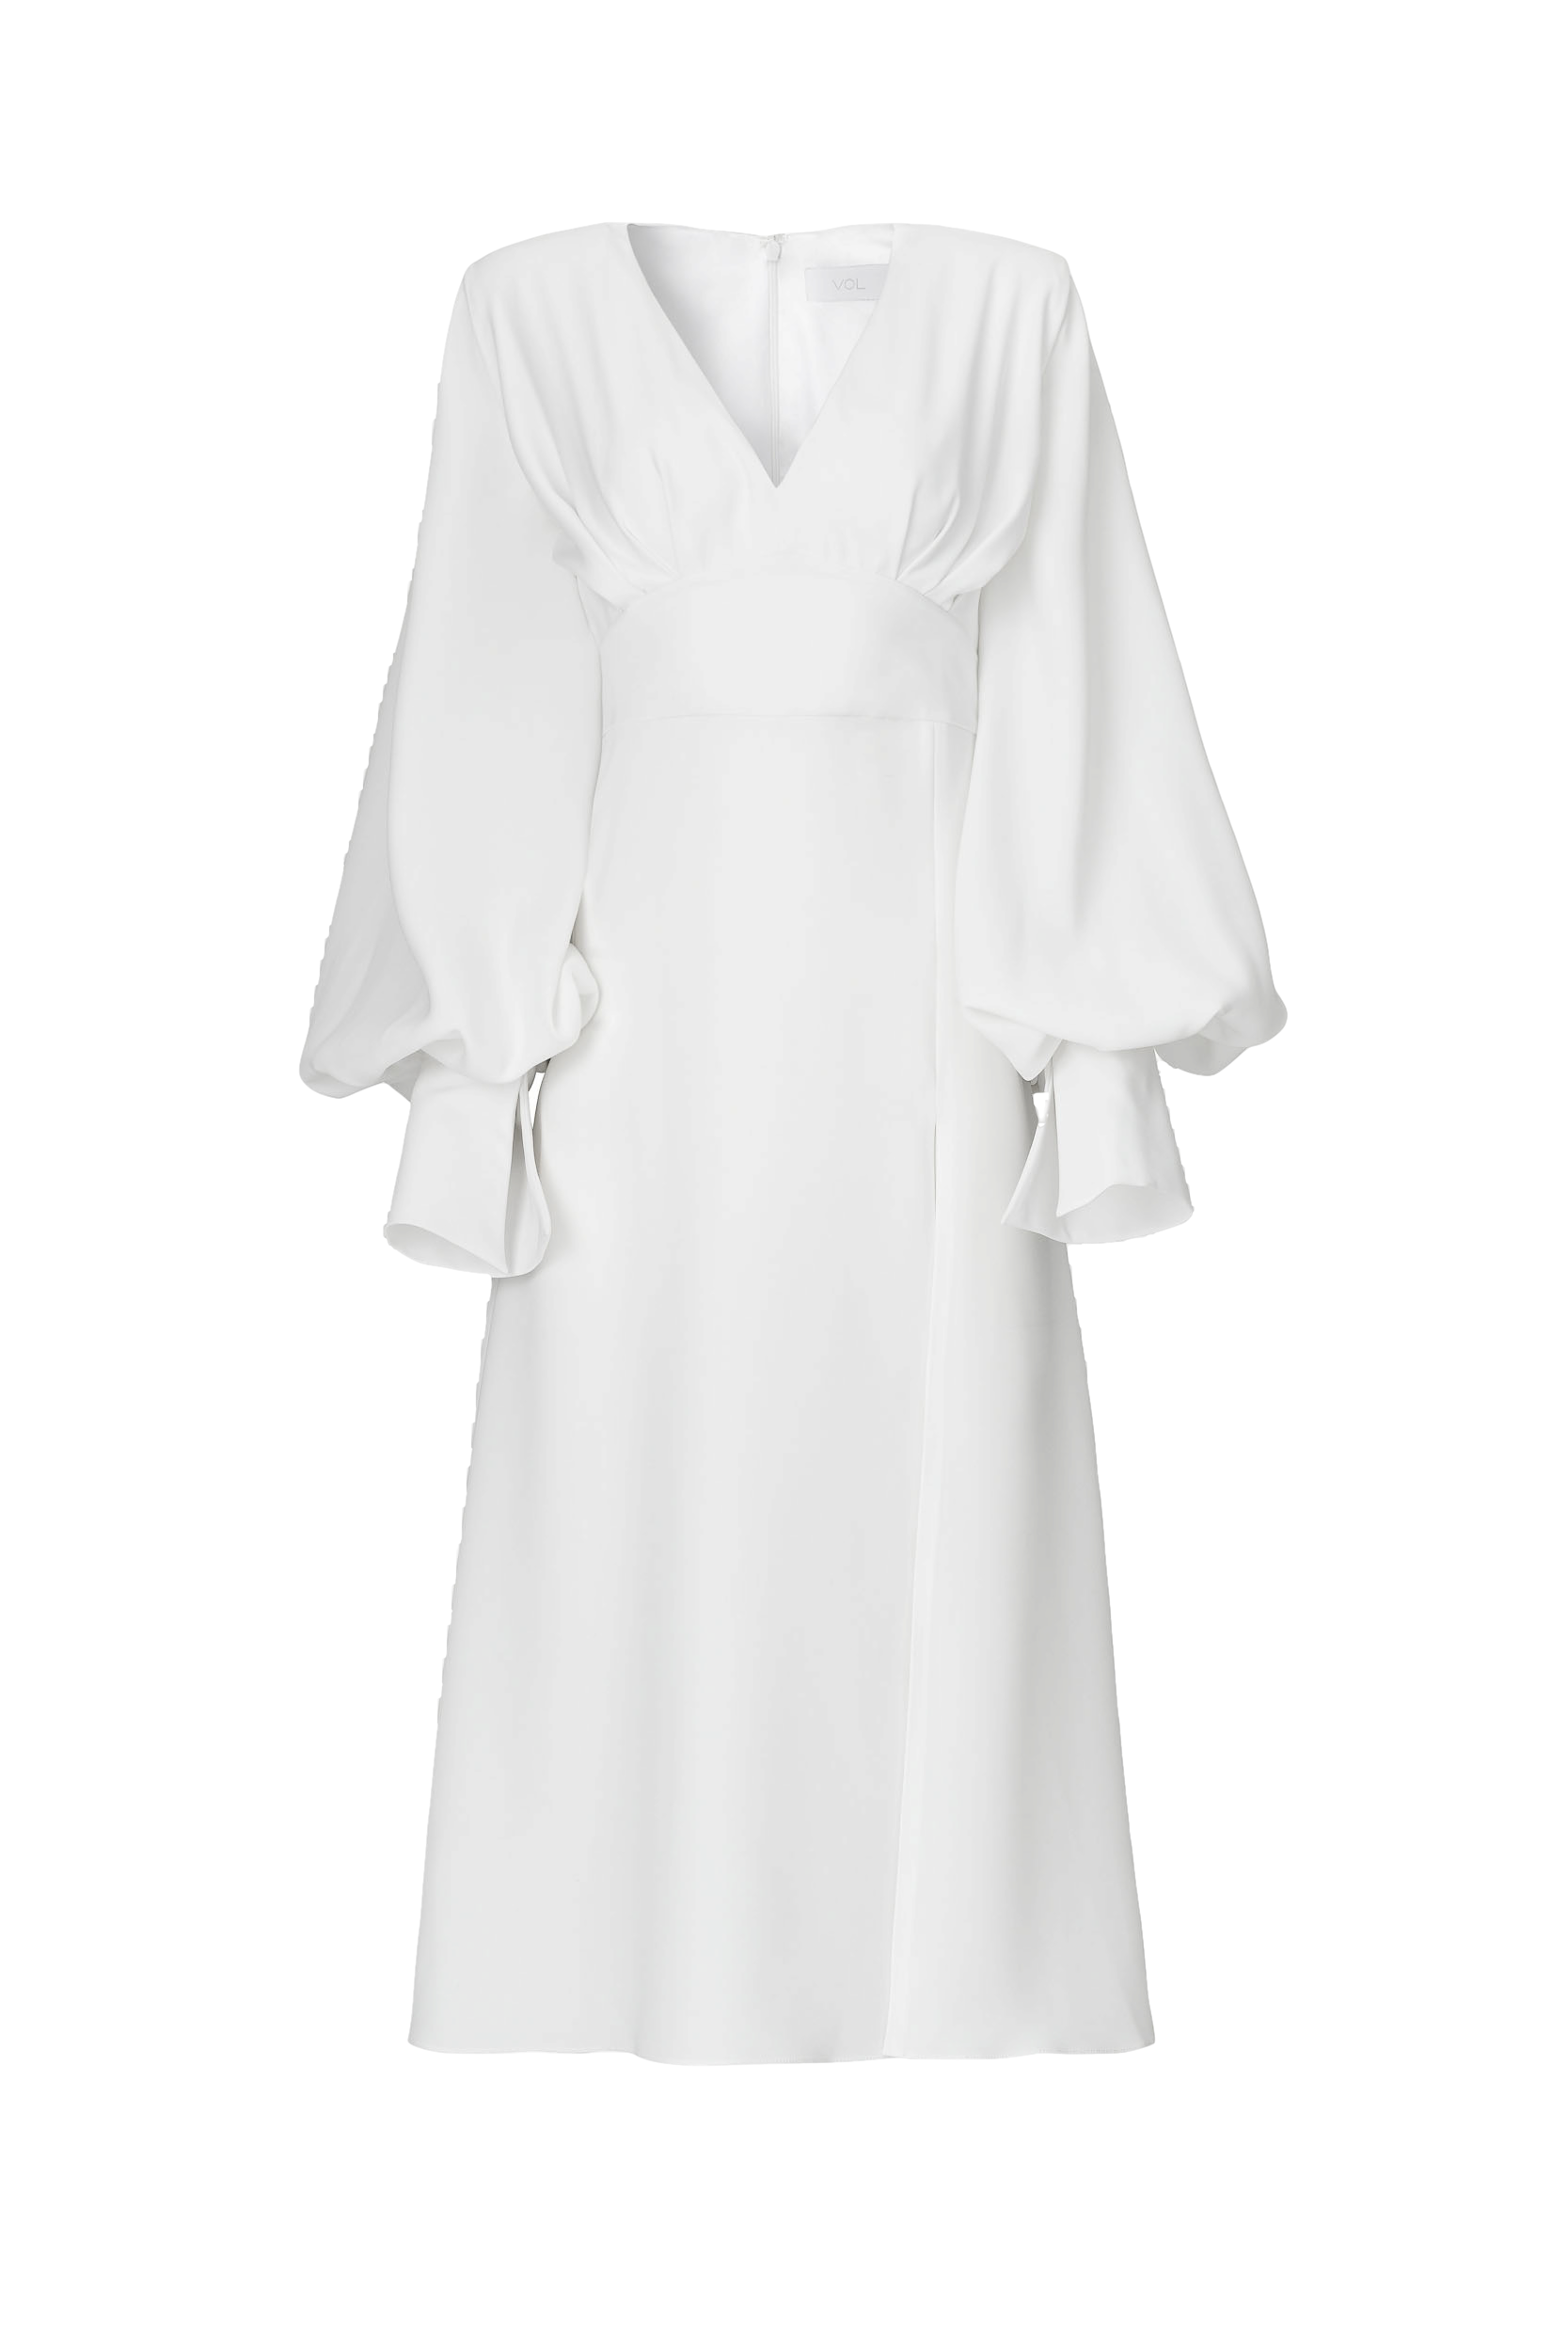 Vol Venice Dress In White